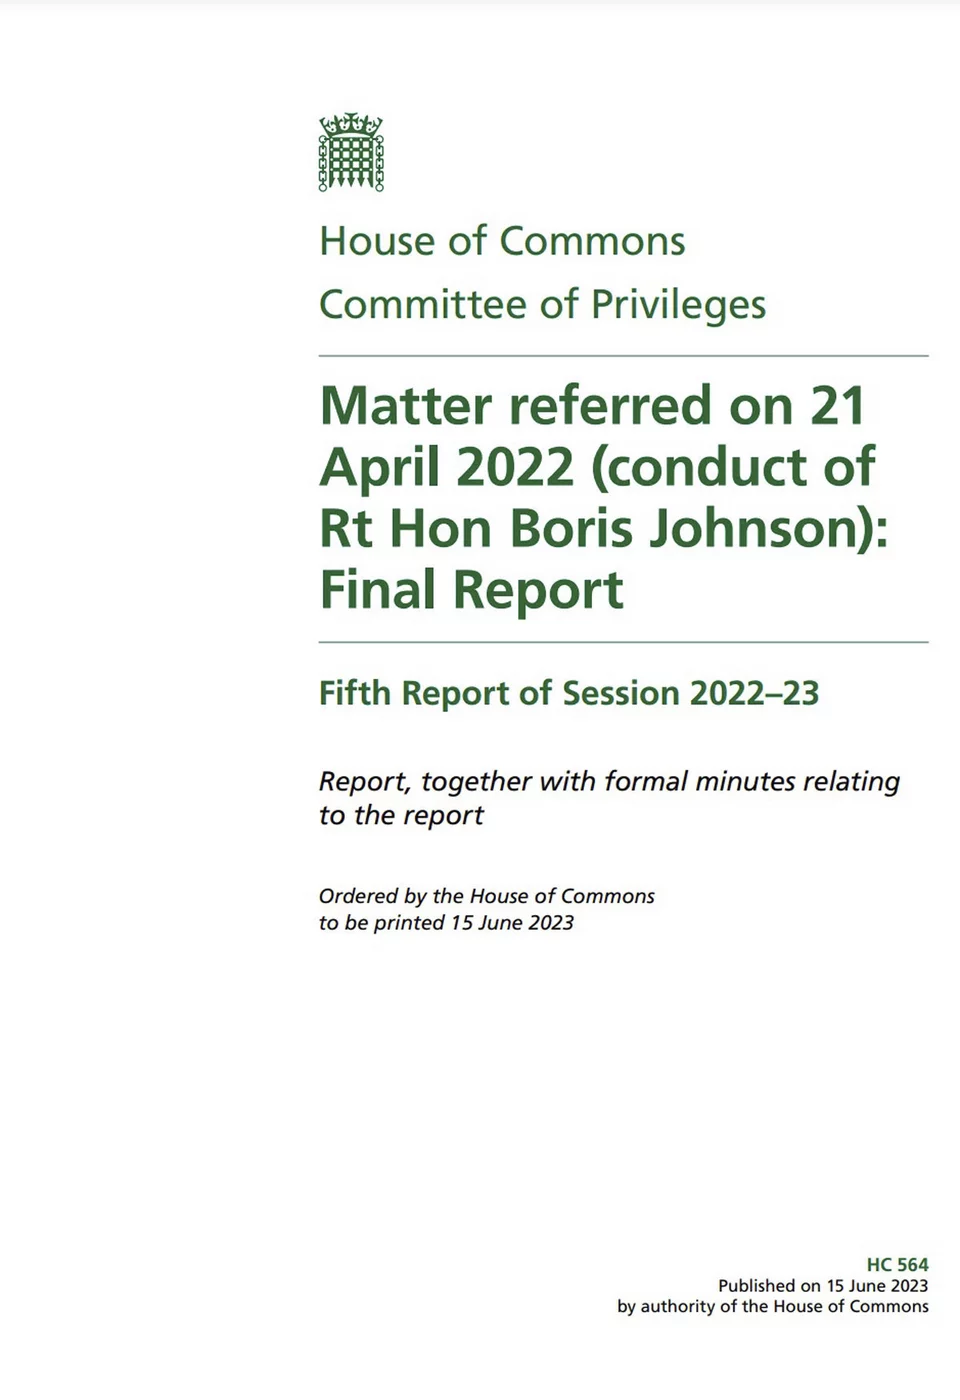 H πρώτη σελίδα του πορίσματος - καταπέλτη για τον Τζόνσον της Επιτροπής Προνομίων, βασικού πειθαρχικού οργάνου για τα μέλη του βρετανικού Κοινοβουλίου 